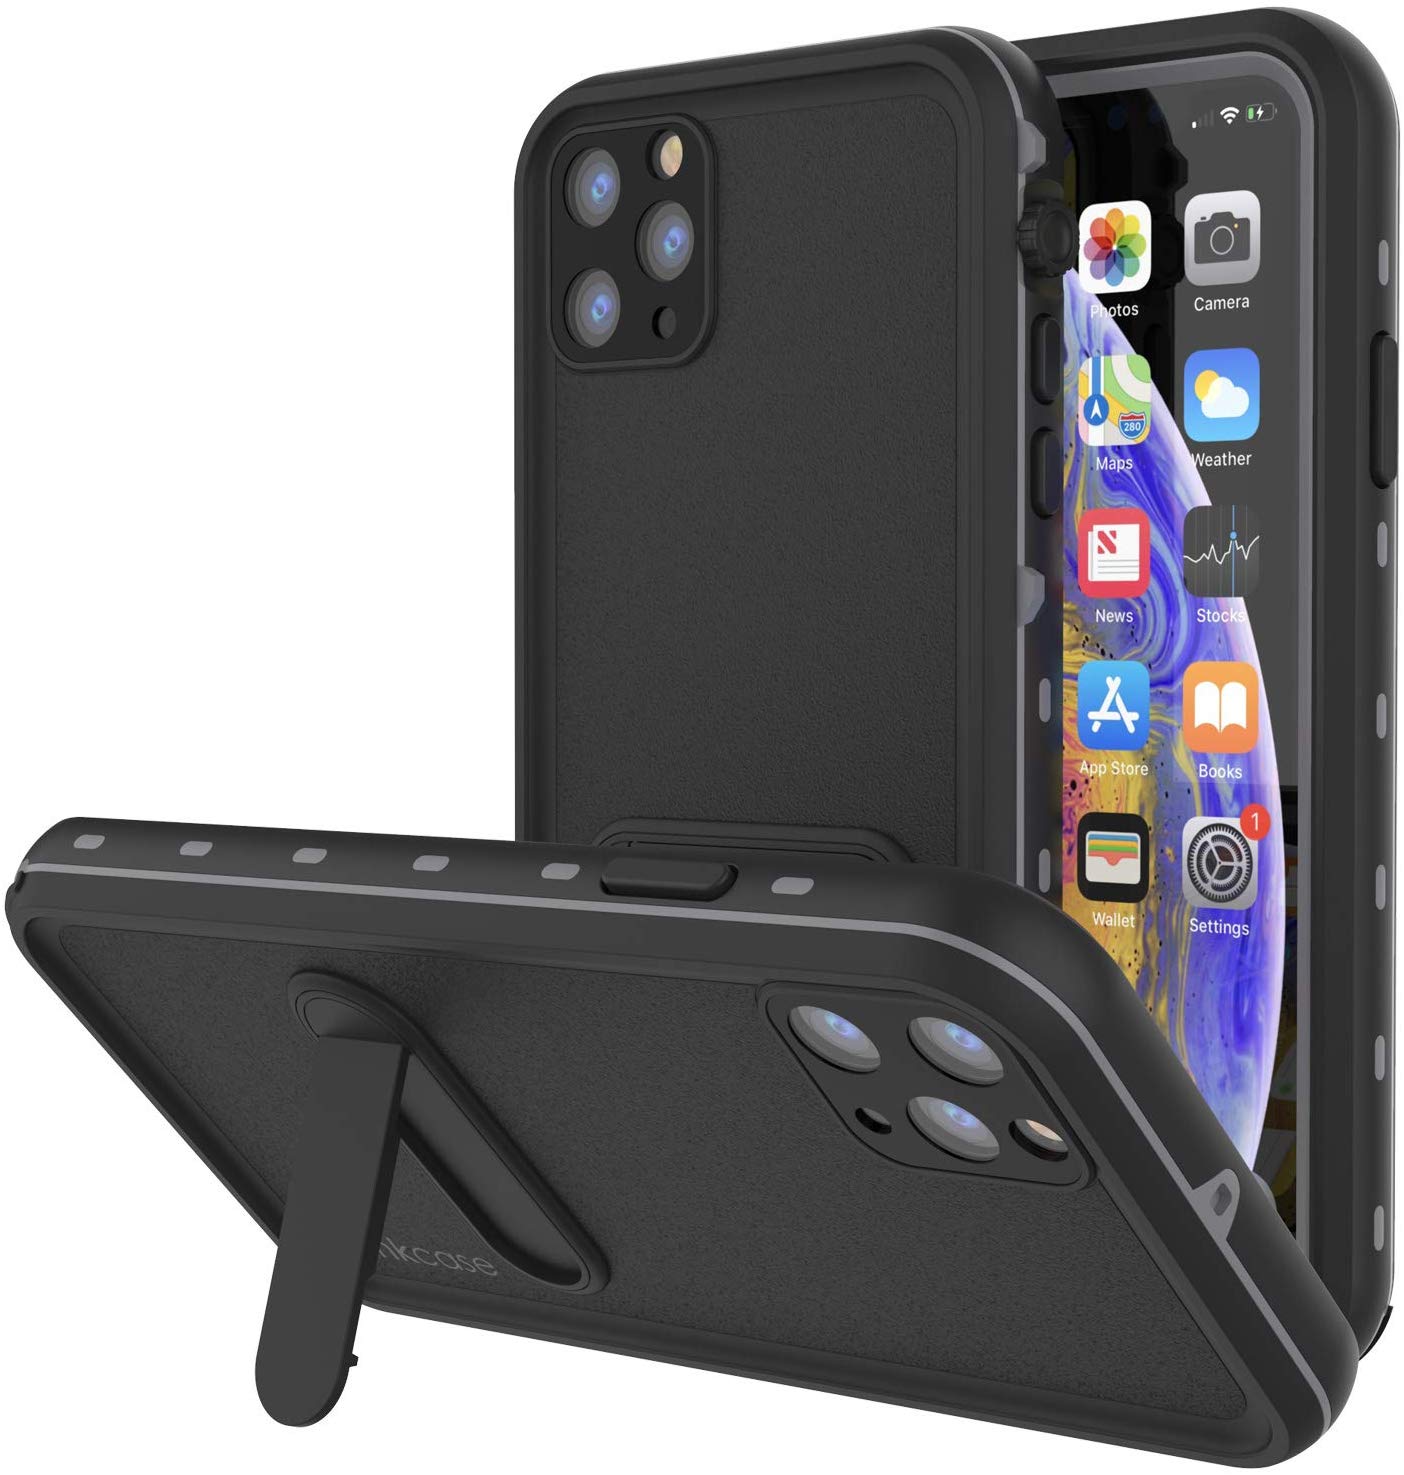 Punkcase iPhone 11 Pro Max Waterproof Case [KickStud Series] Slim Fit IP68 Certified [Shockproof] Armor Cover w/Built-In Screen Protector + Kickstand